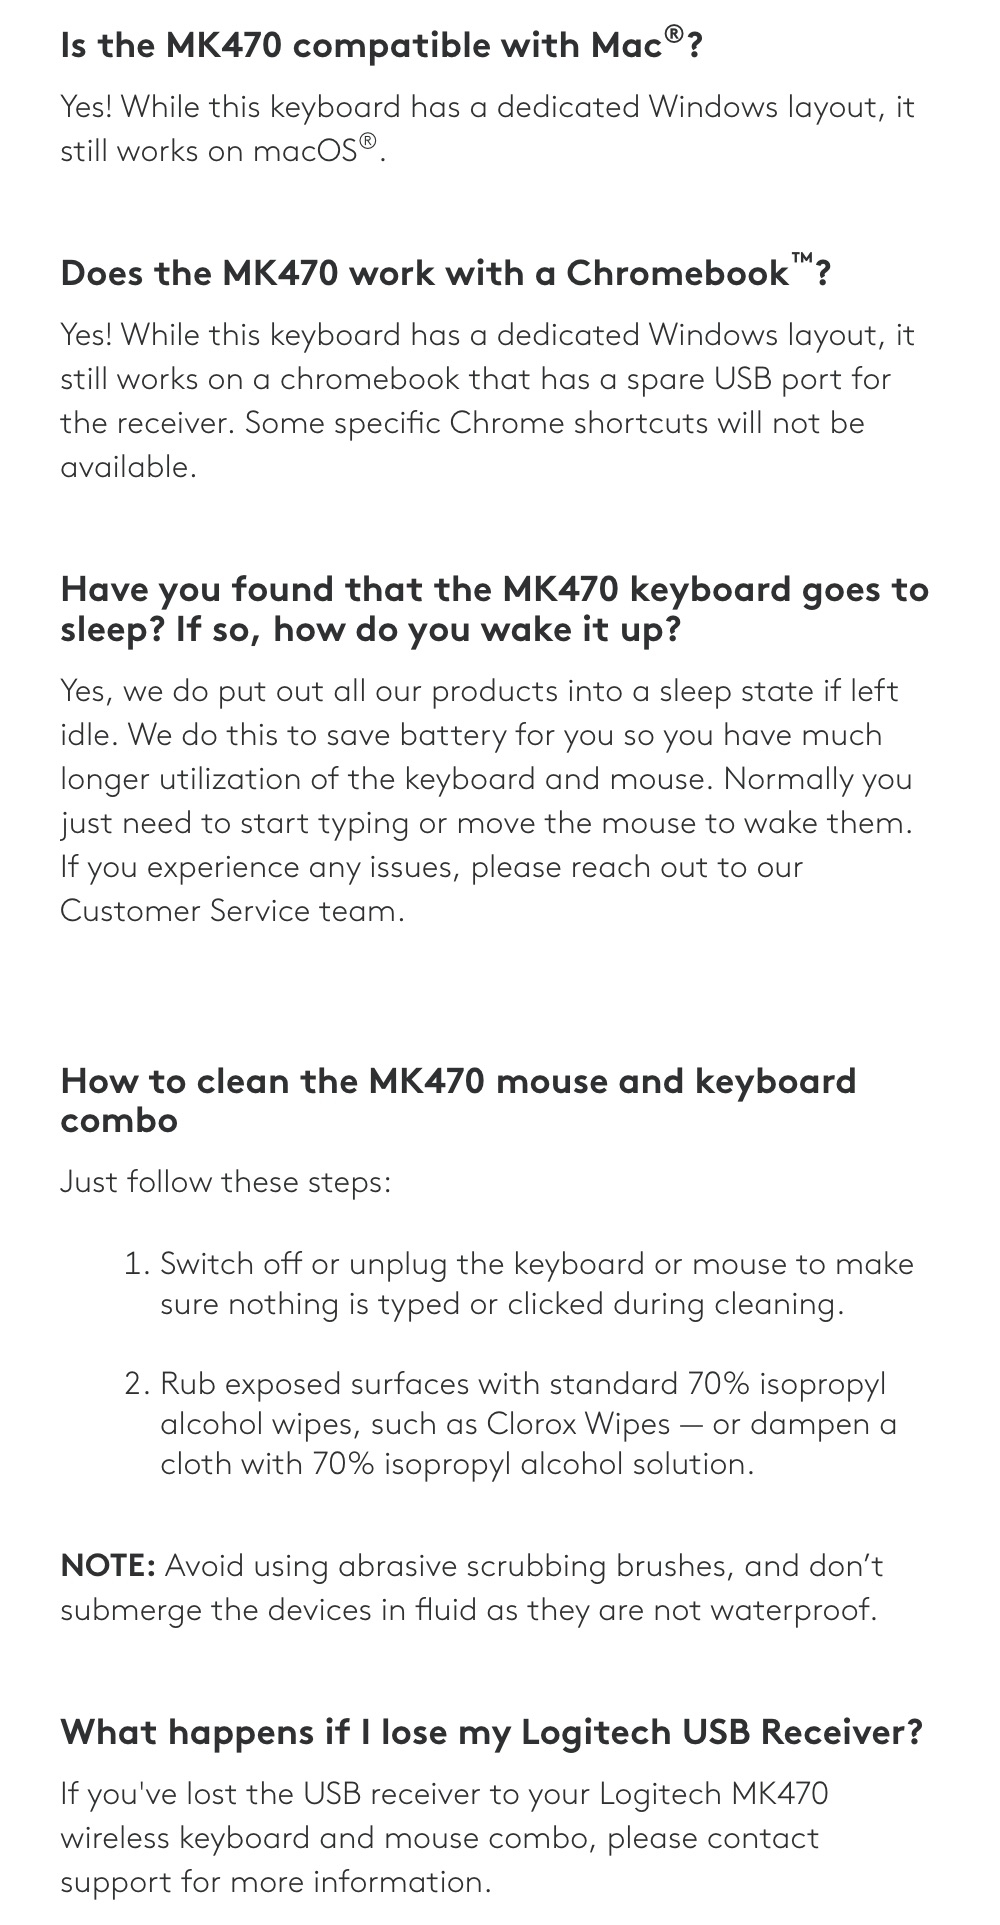 Logitech-MK470-Slim-Wireless-Keyboard-And-Mouse-Combo-Description-6